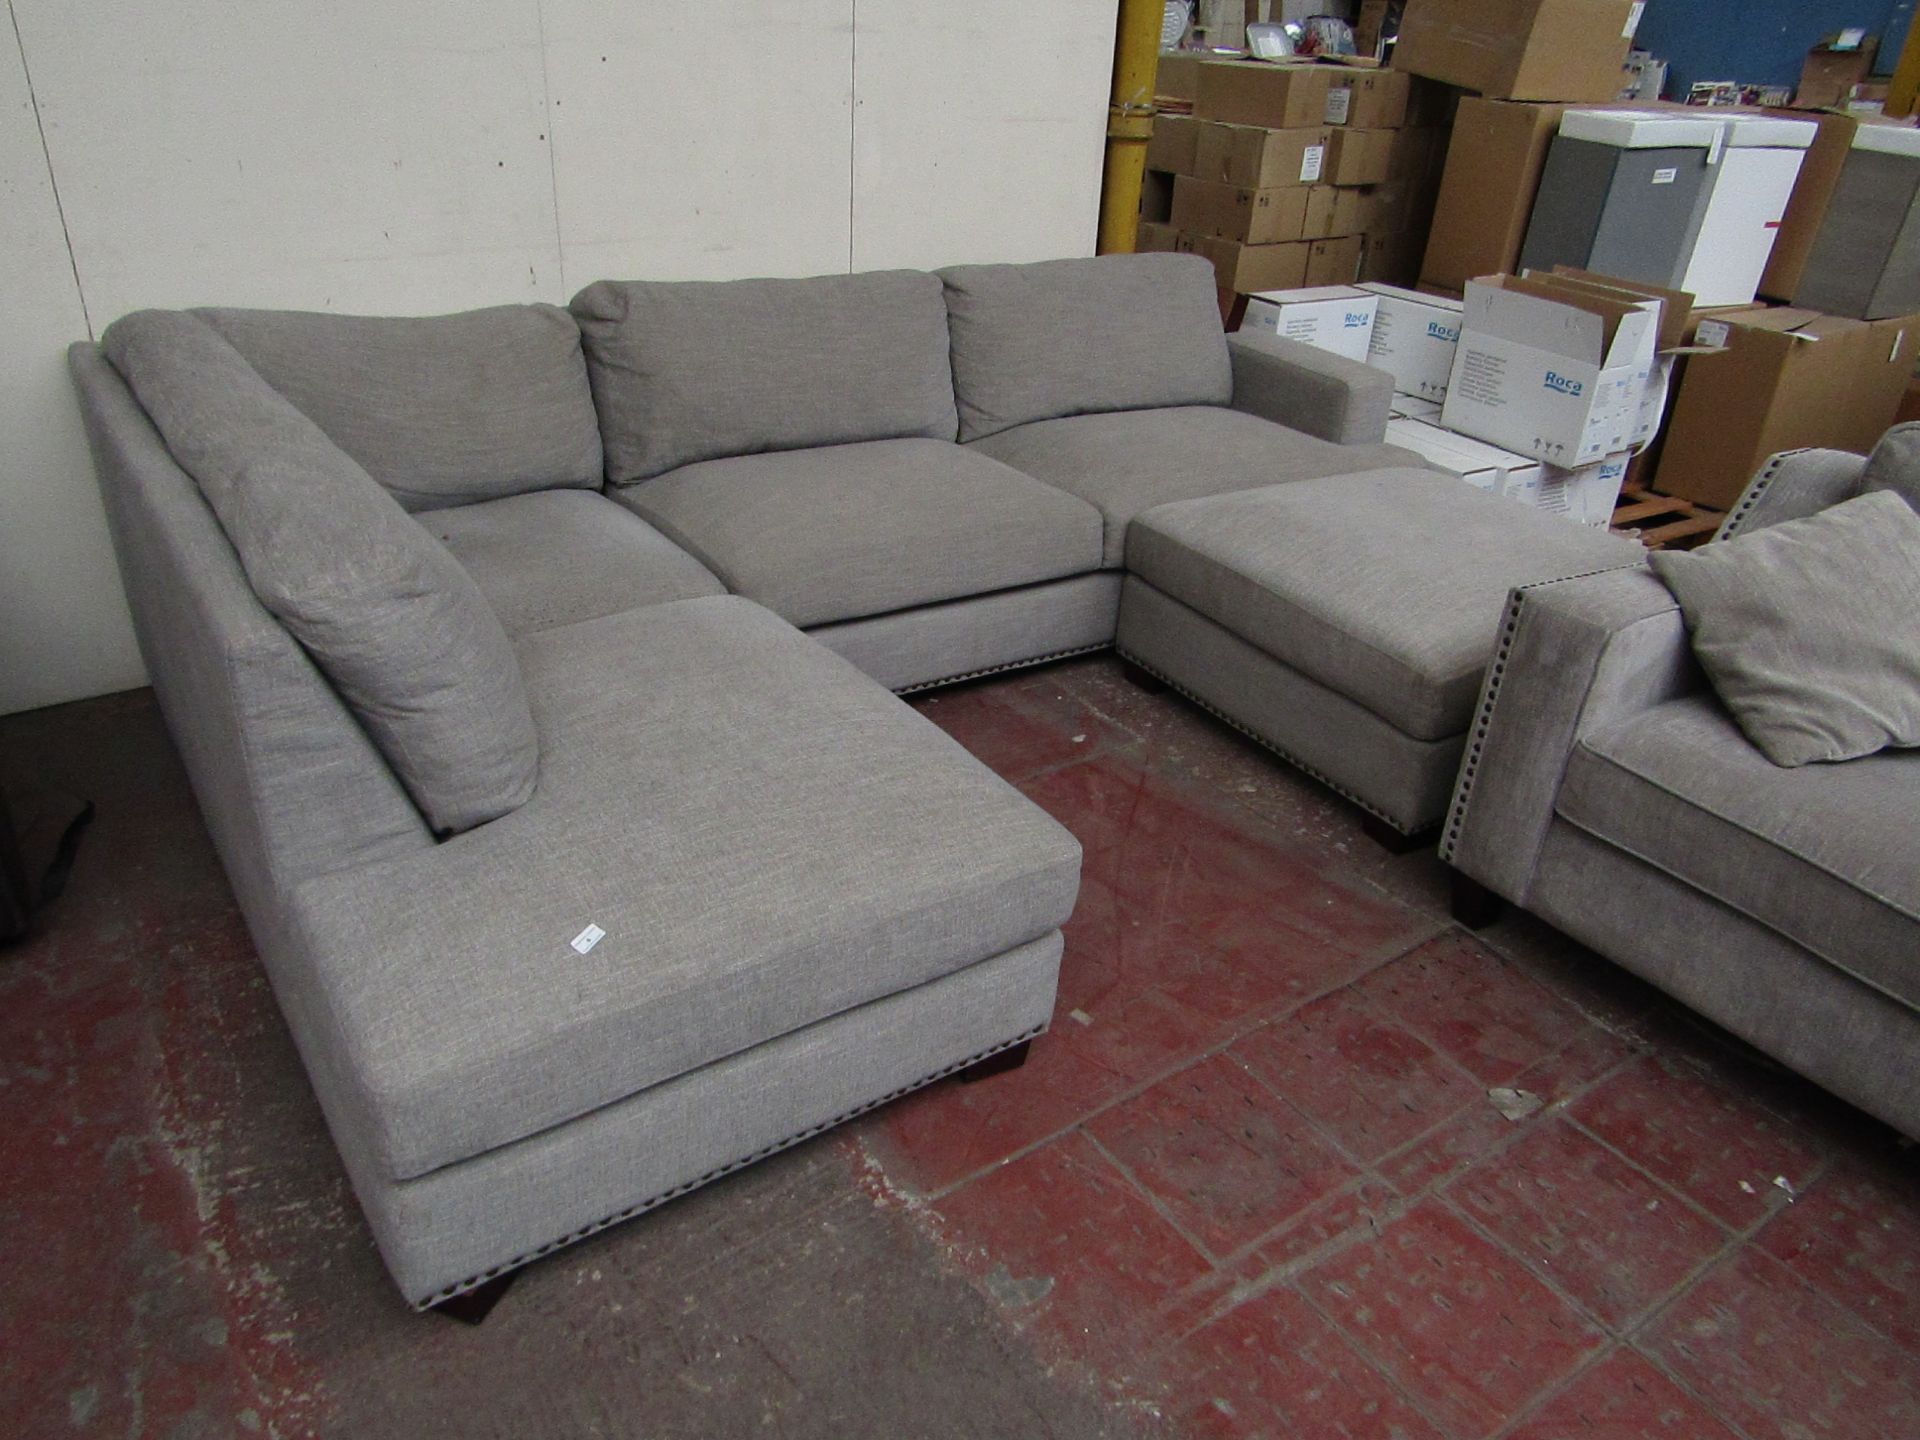 Costco corner sofa with button base, in used condition.